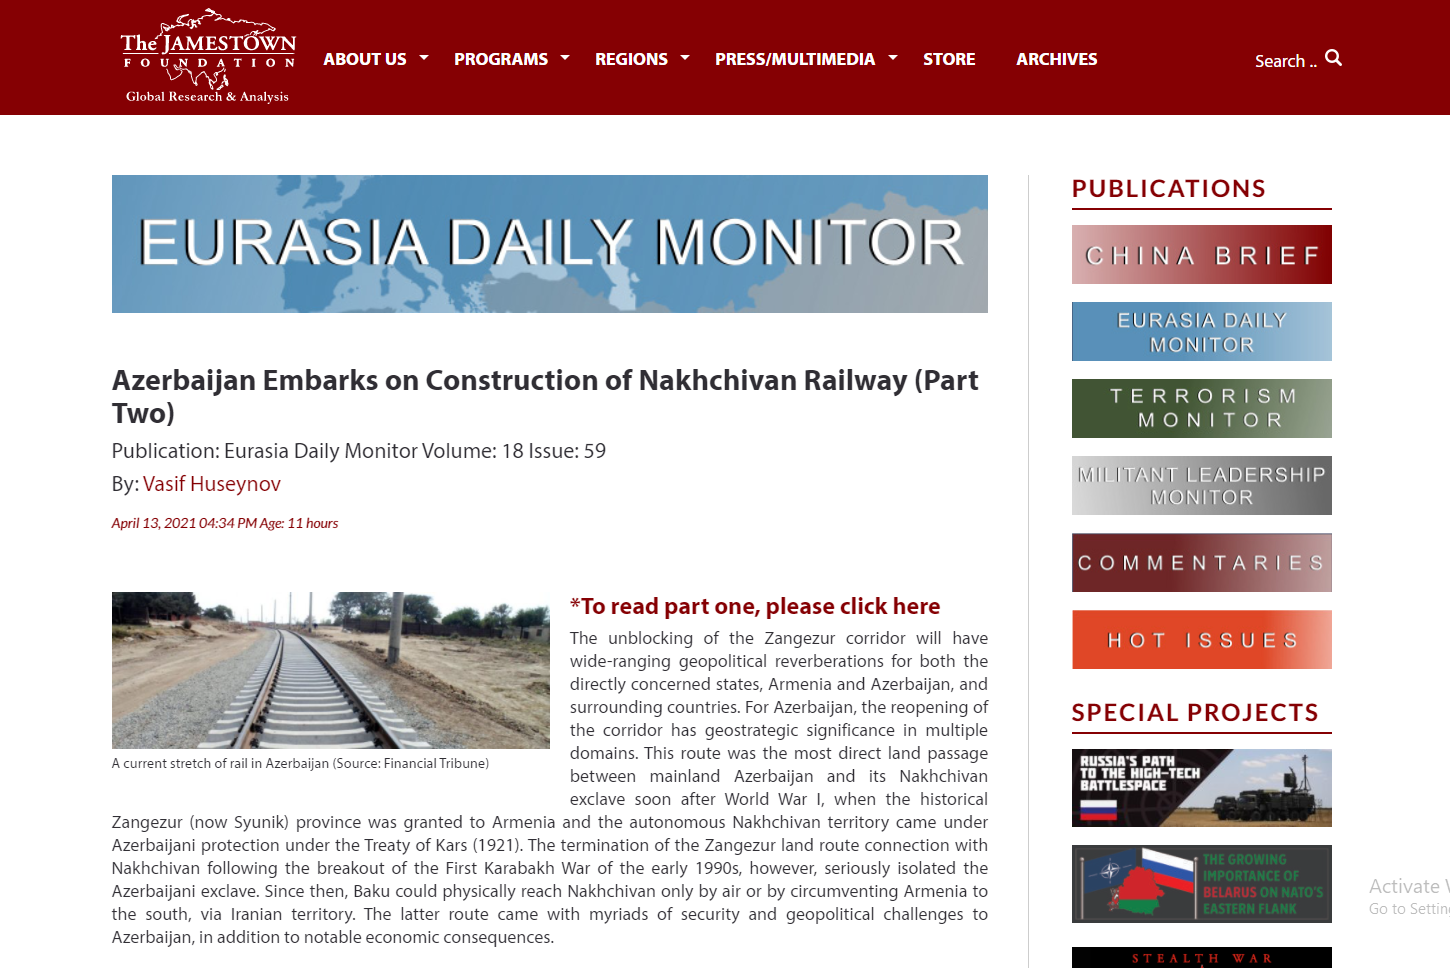 Azerbaijan Embarks on Construction of Nakhchivan Railway (Part Two)